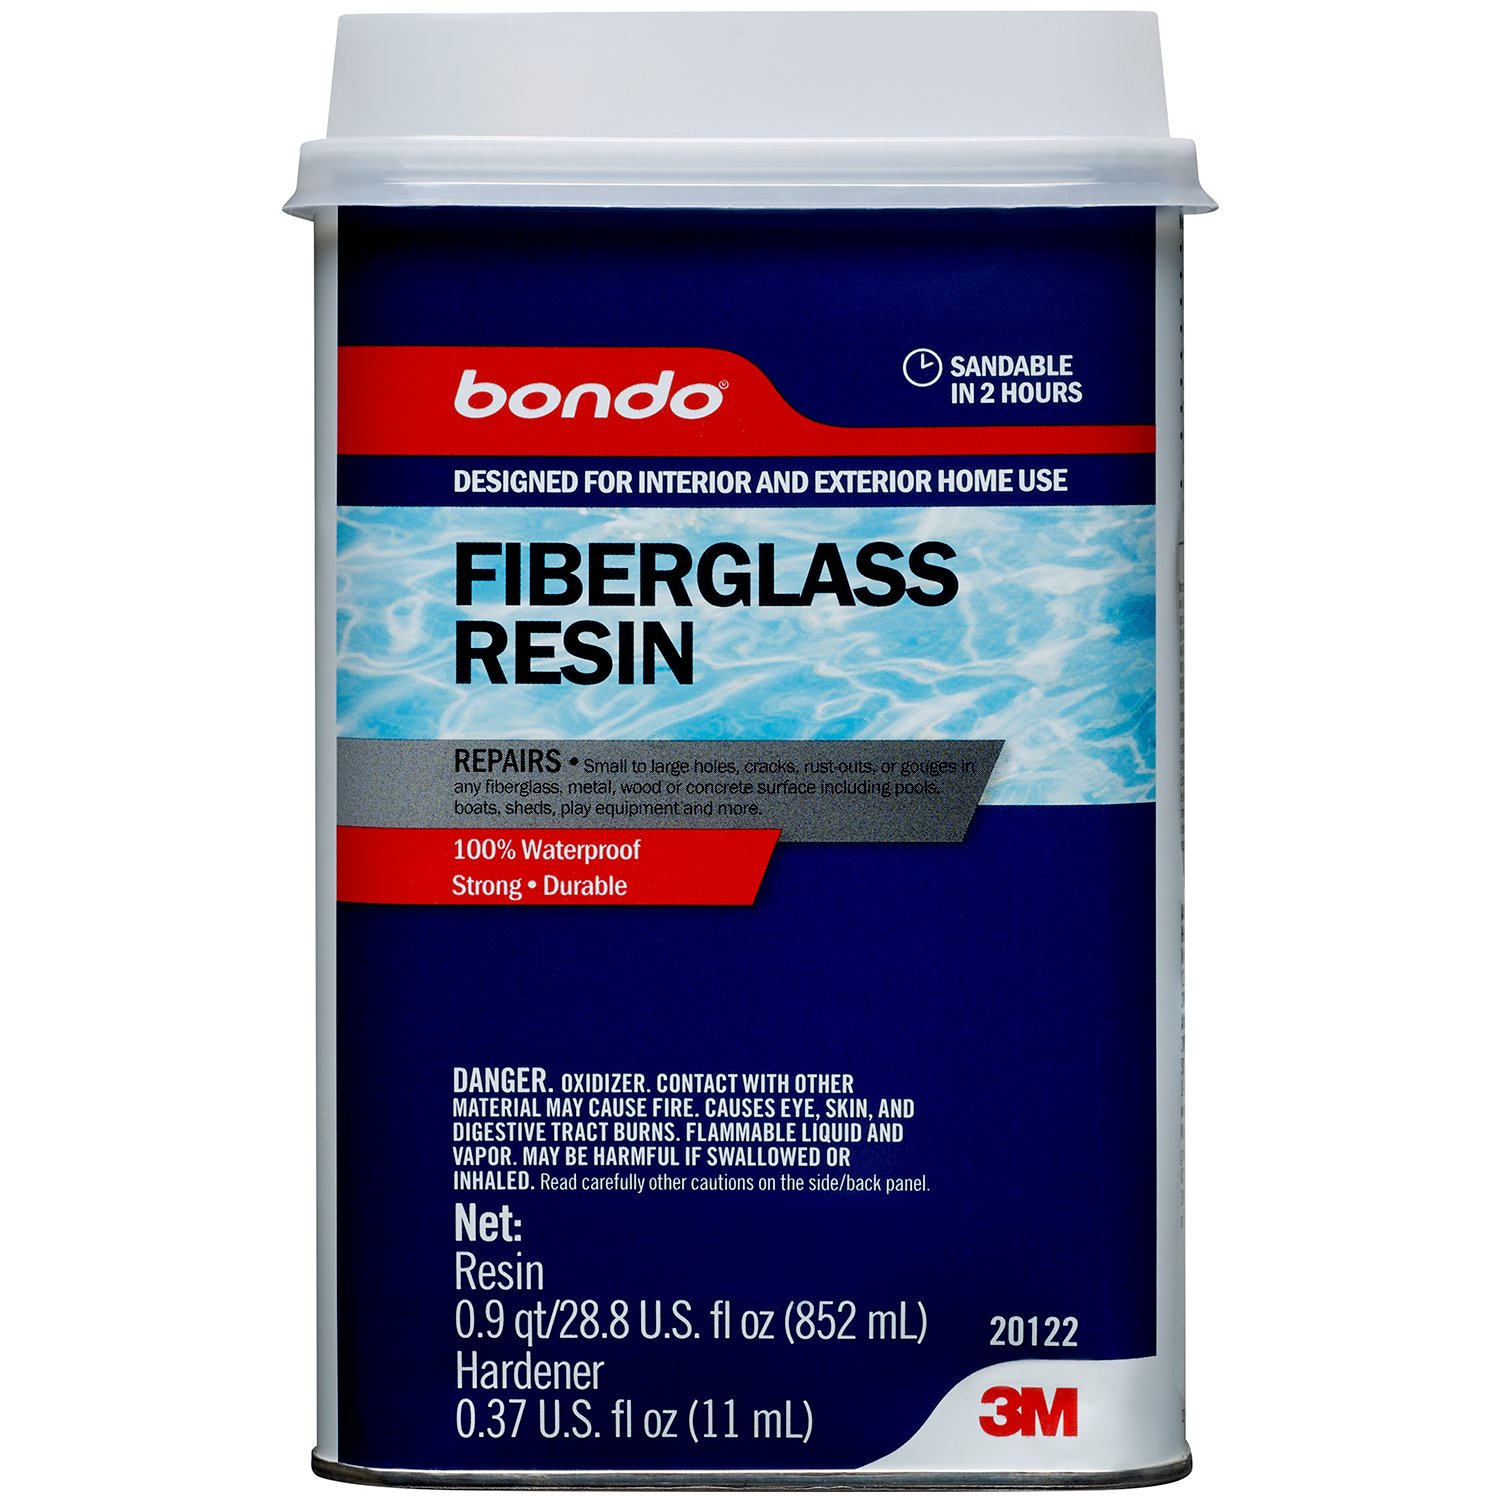 7100152951 - Bondo Fiberglass Resin, 20122, 0.9 Quart, 4 per case